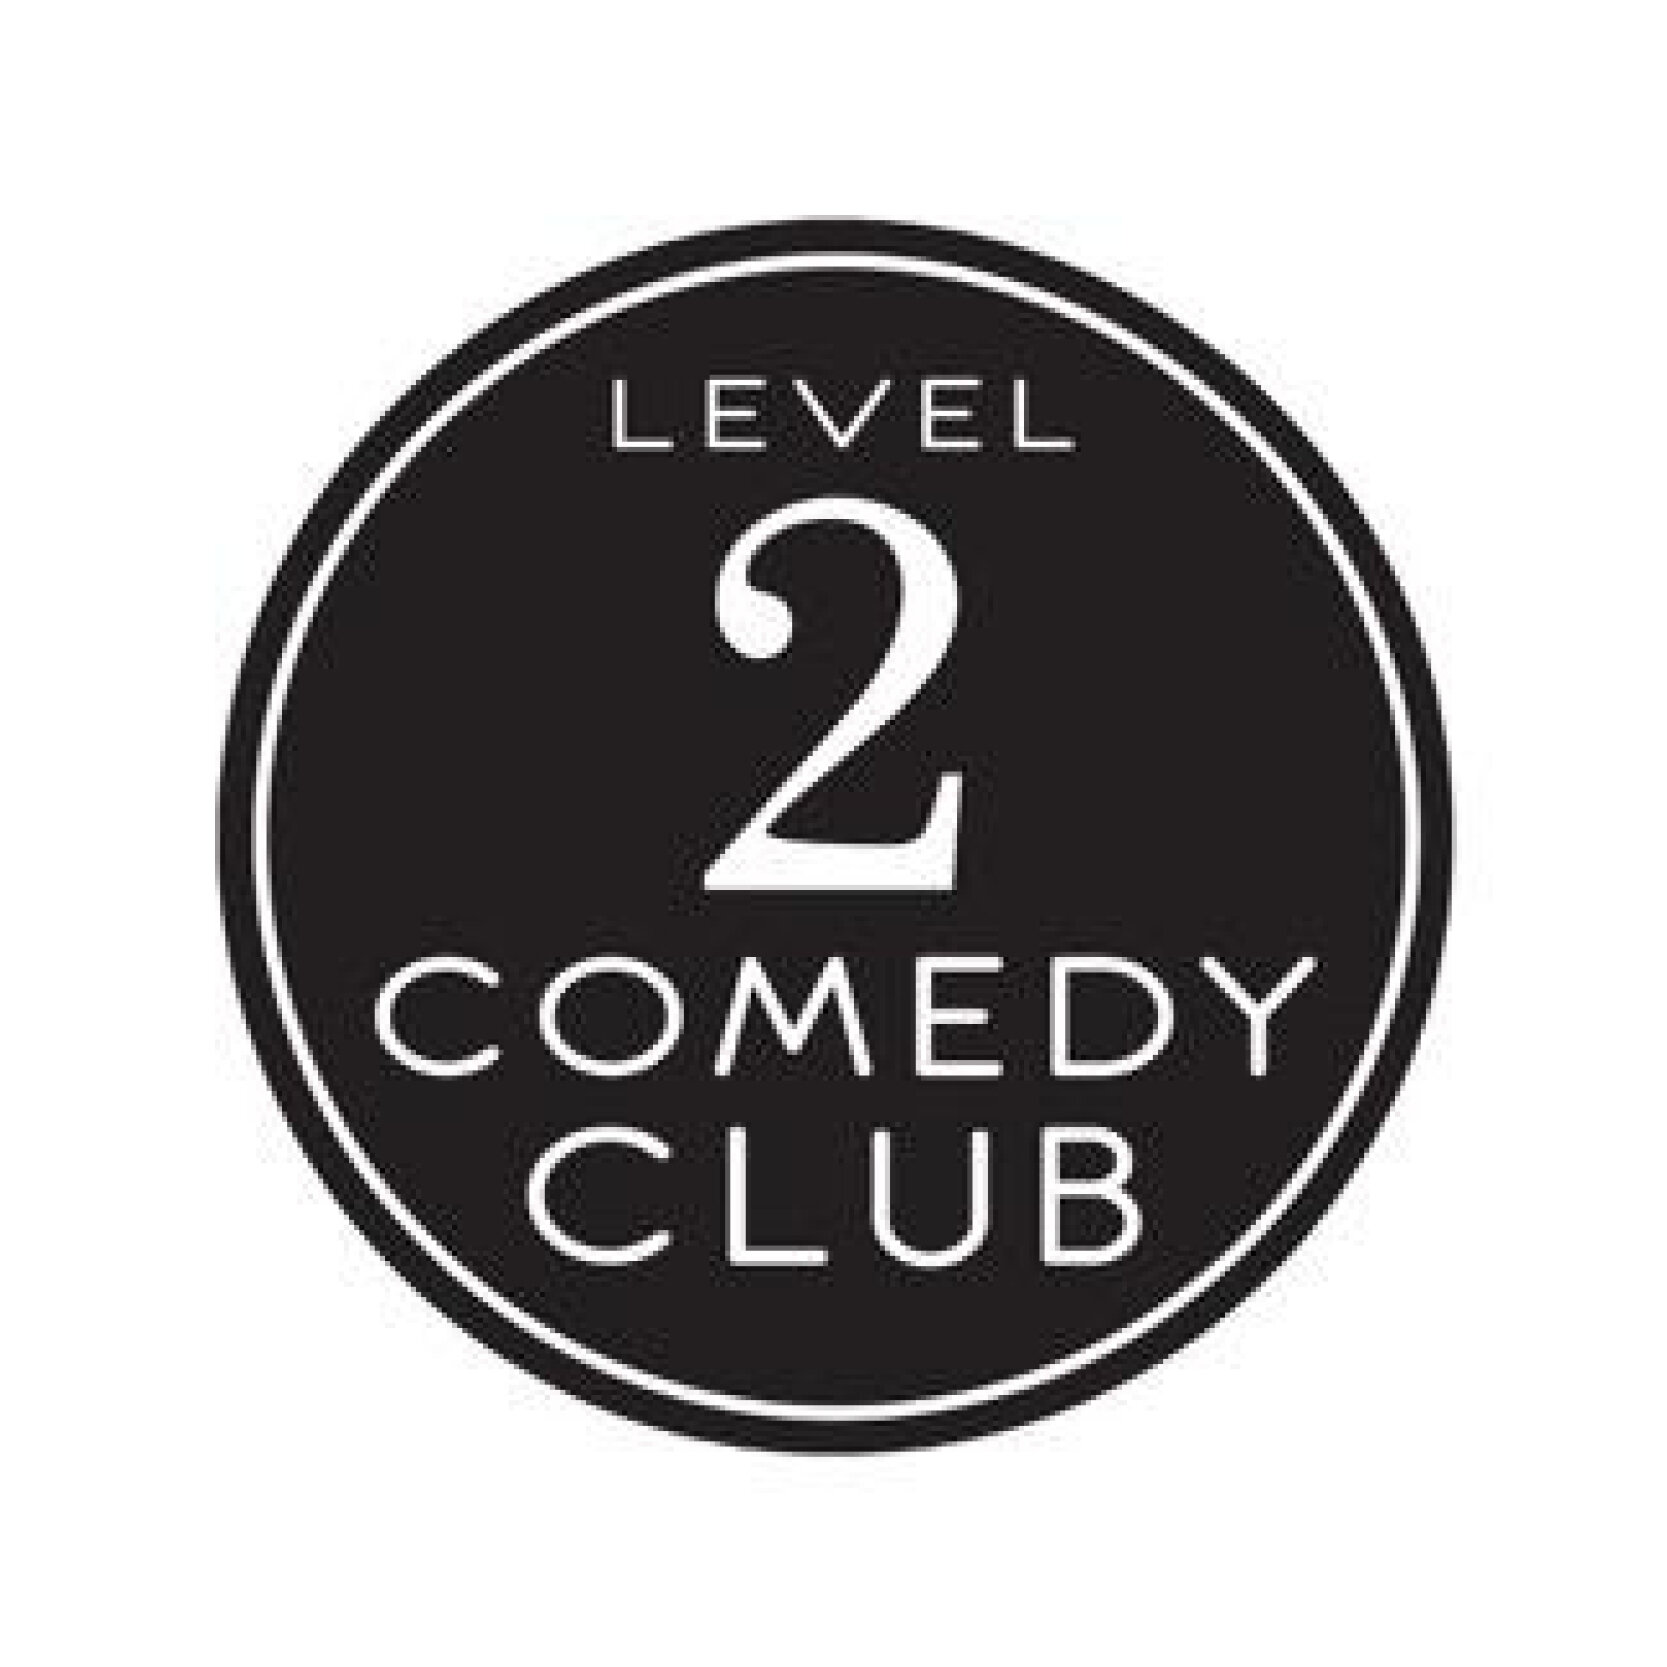 Level 2 Comedy Club